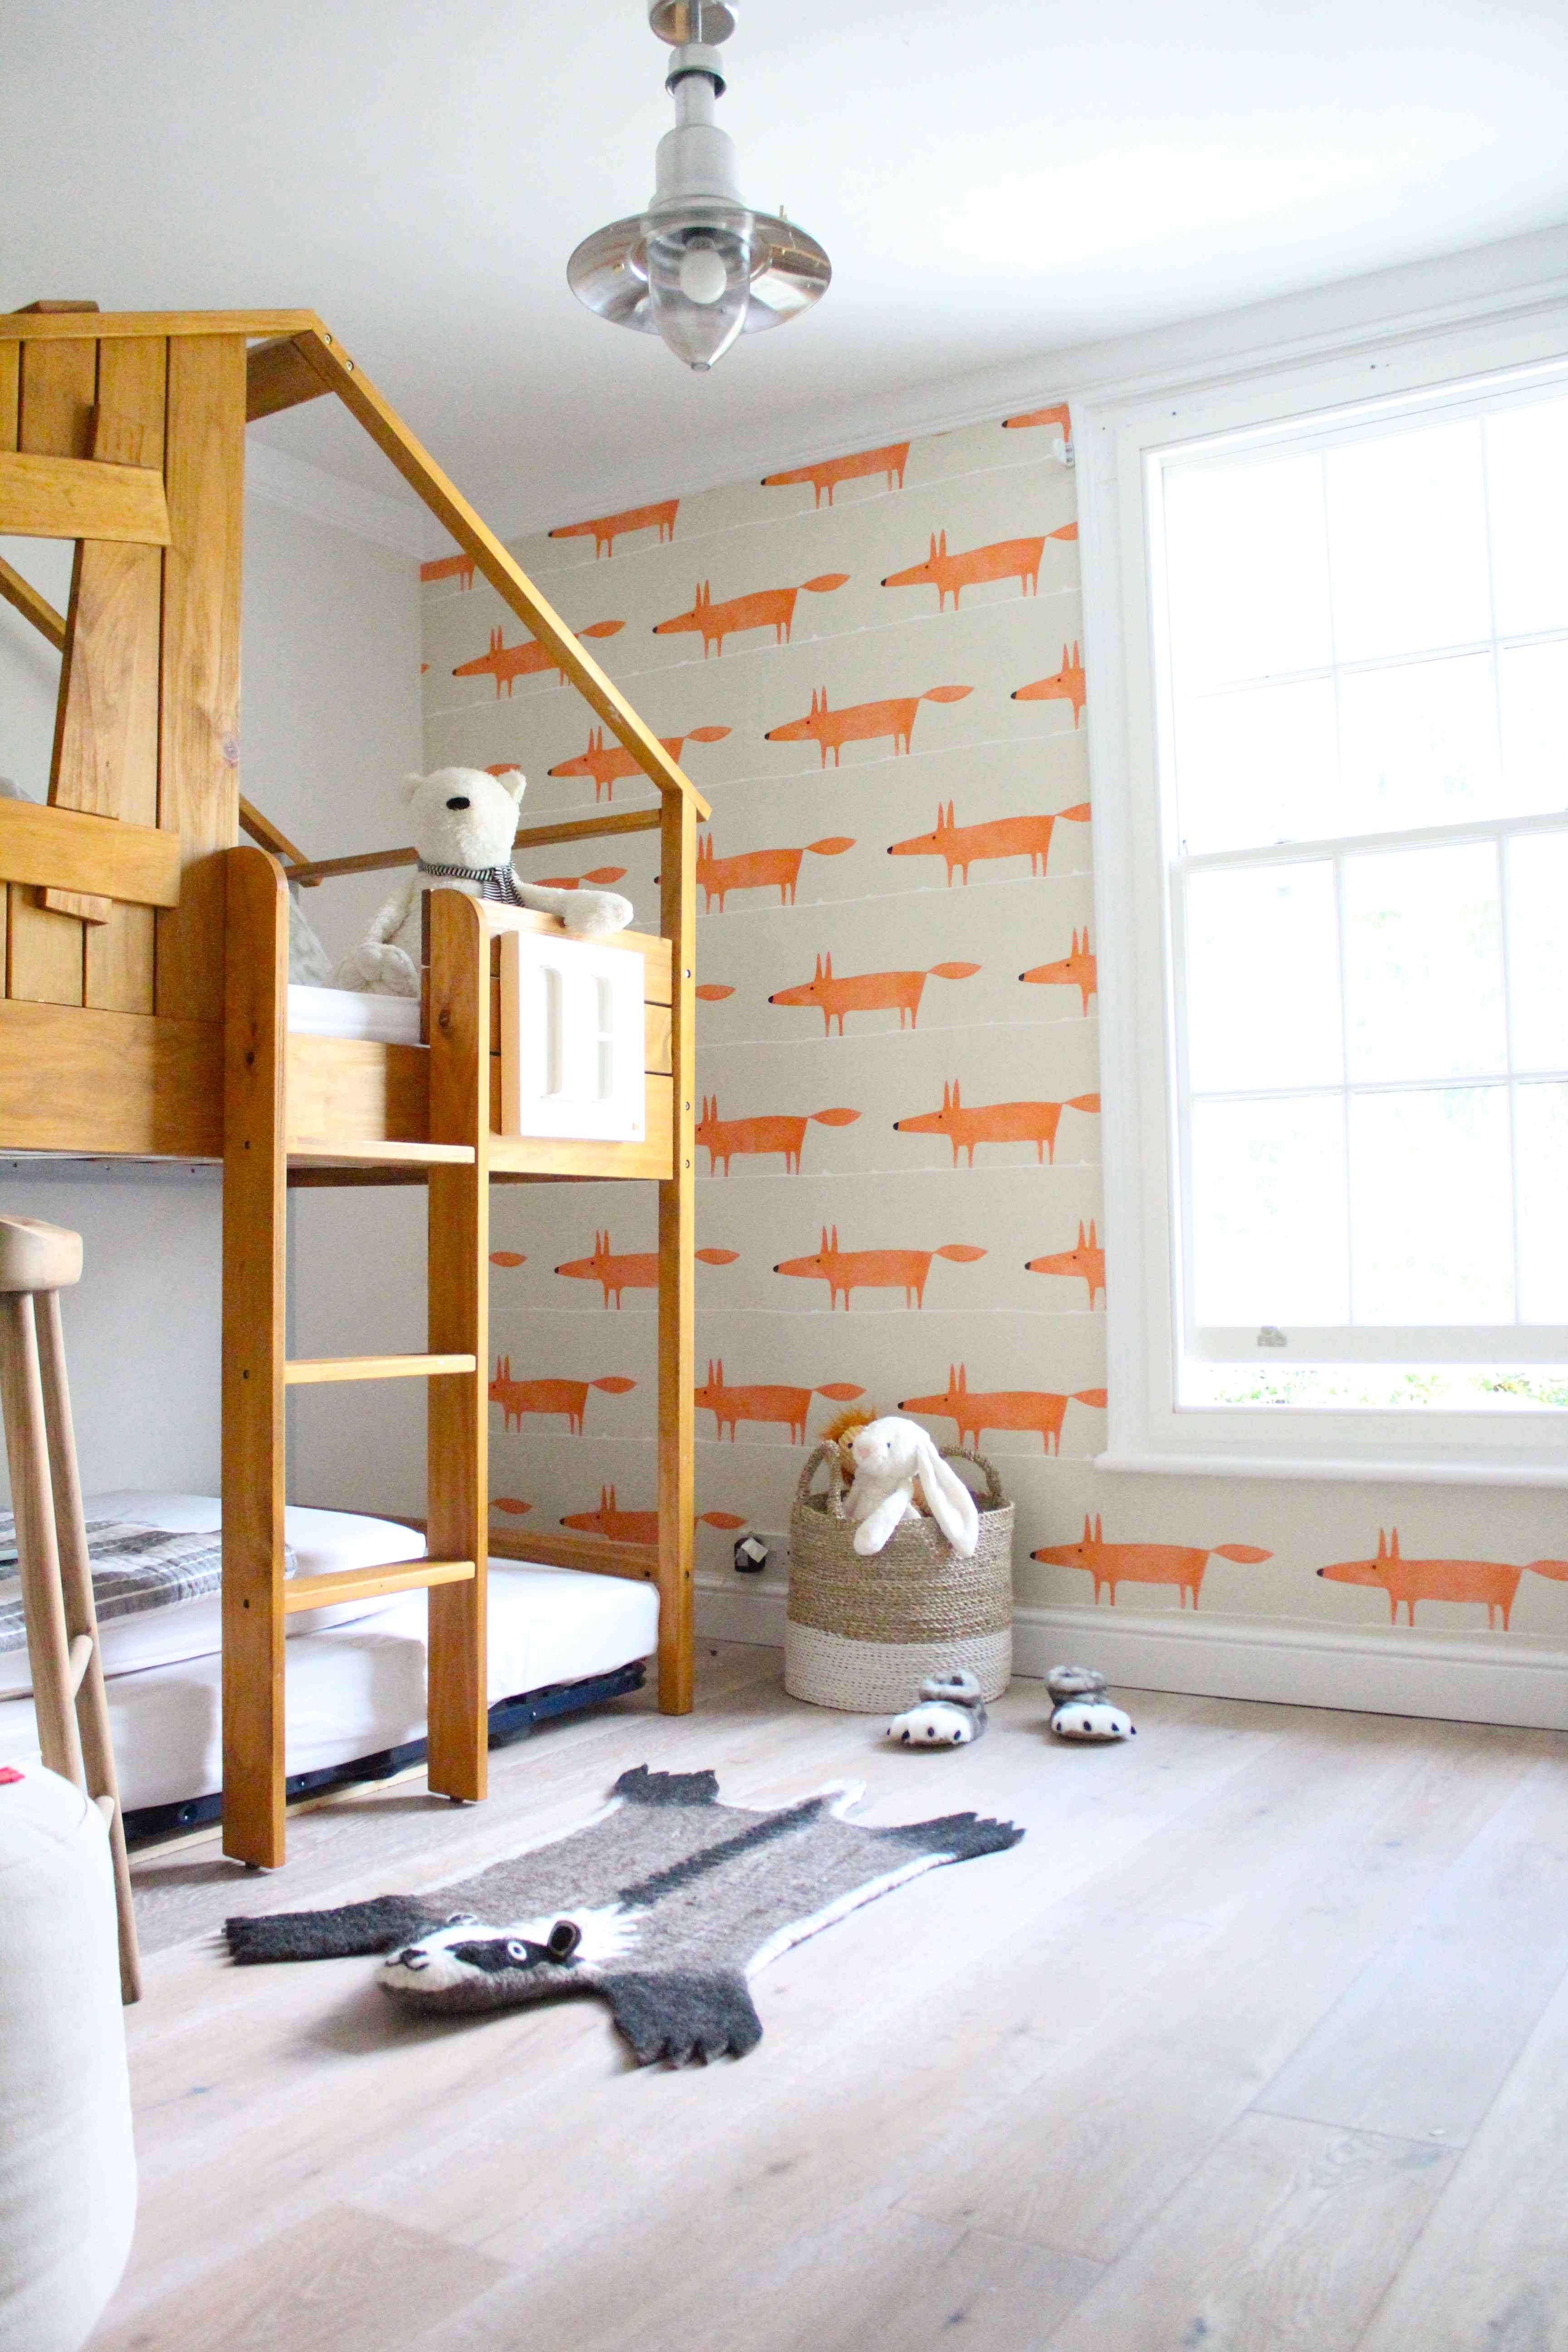 scion fox wallpaper,room,ceiling,floor,wall,furniture